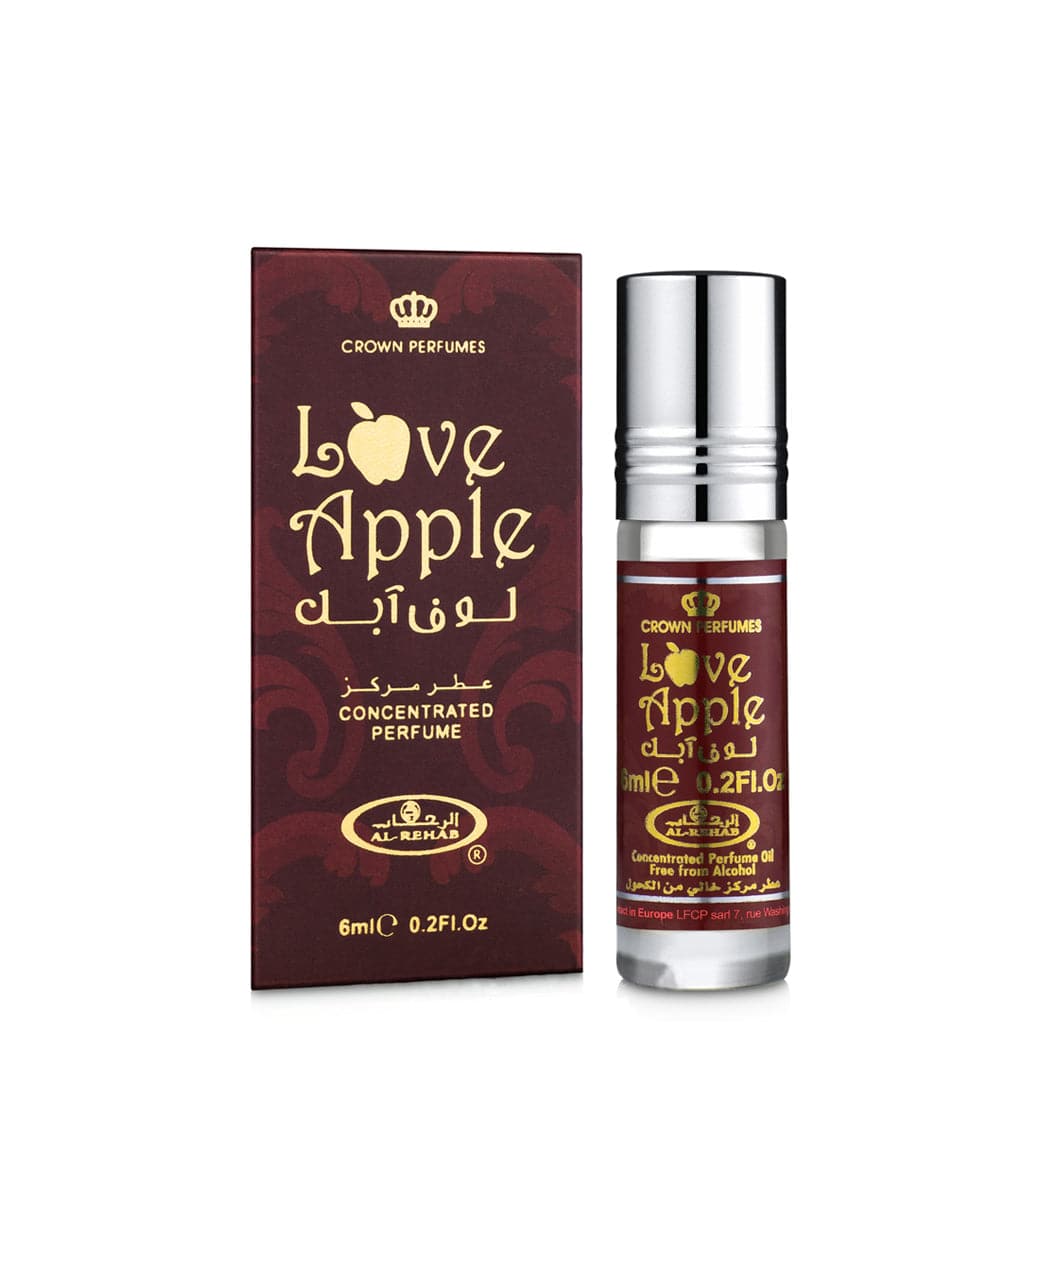 Love Apple 6ml Perfume Oil by Al Rehab - Intense oud